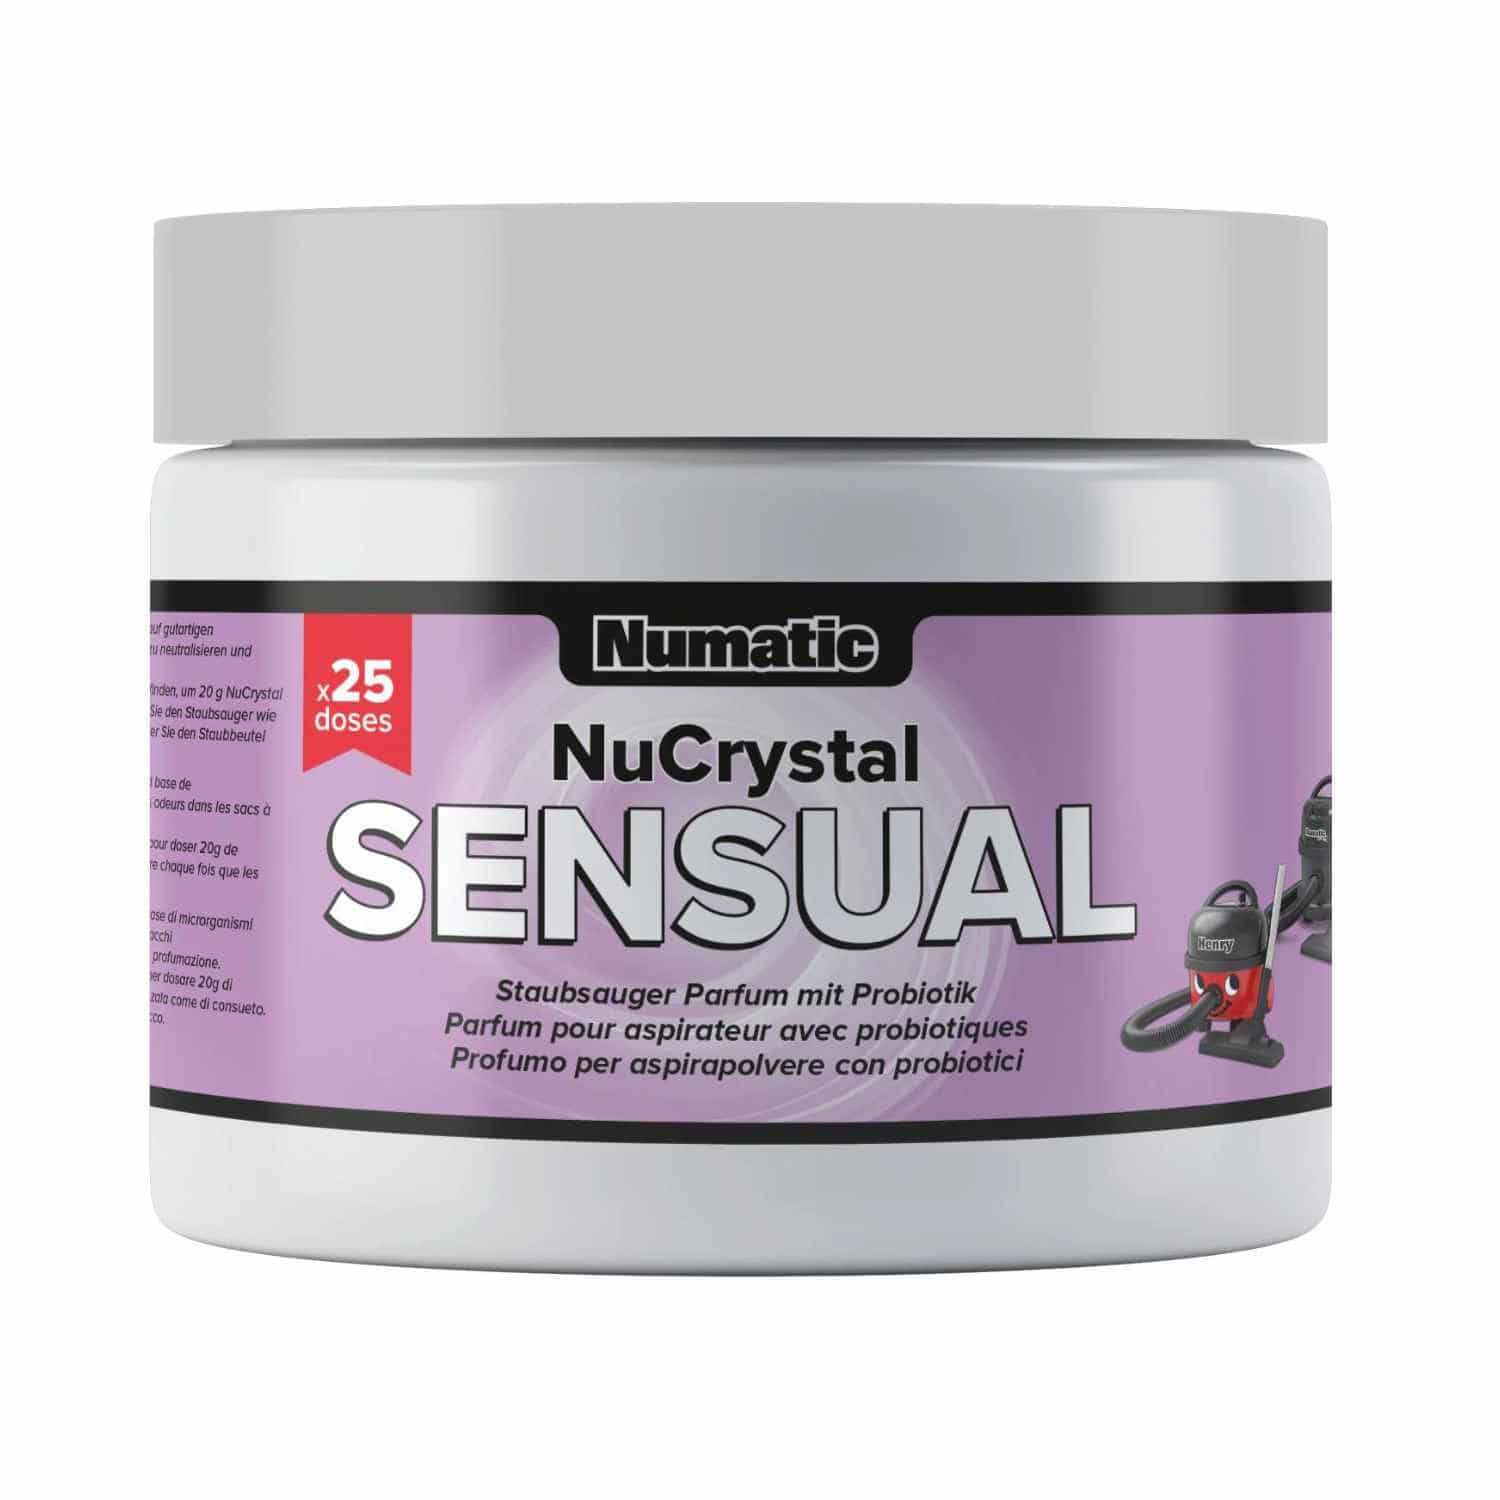 NuCrystal Staubsauger-Deo "Sensual" 